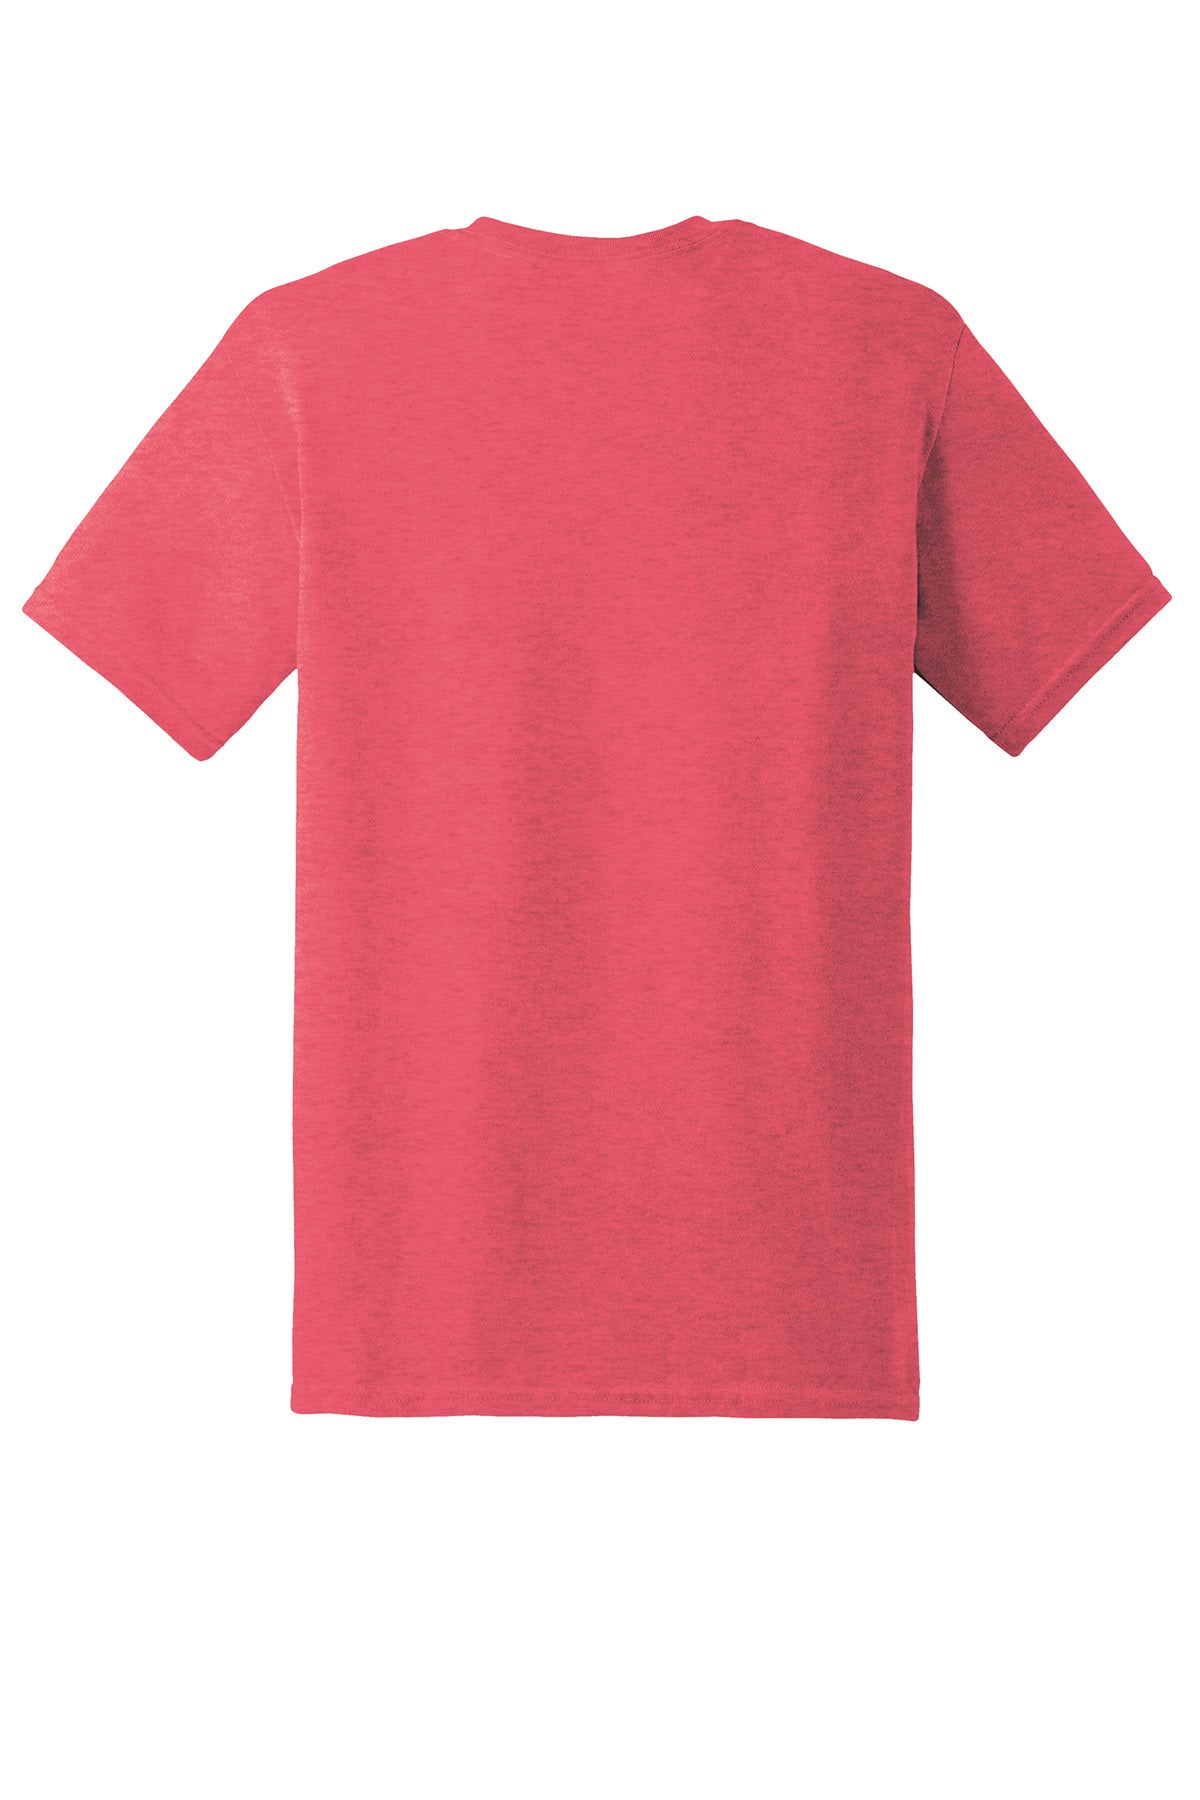 Gildan Mens/Unisex S/S Shirts Heather Red